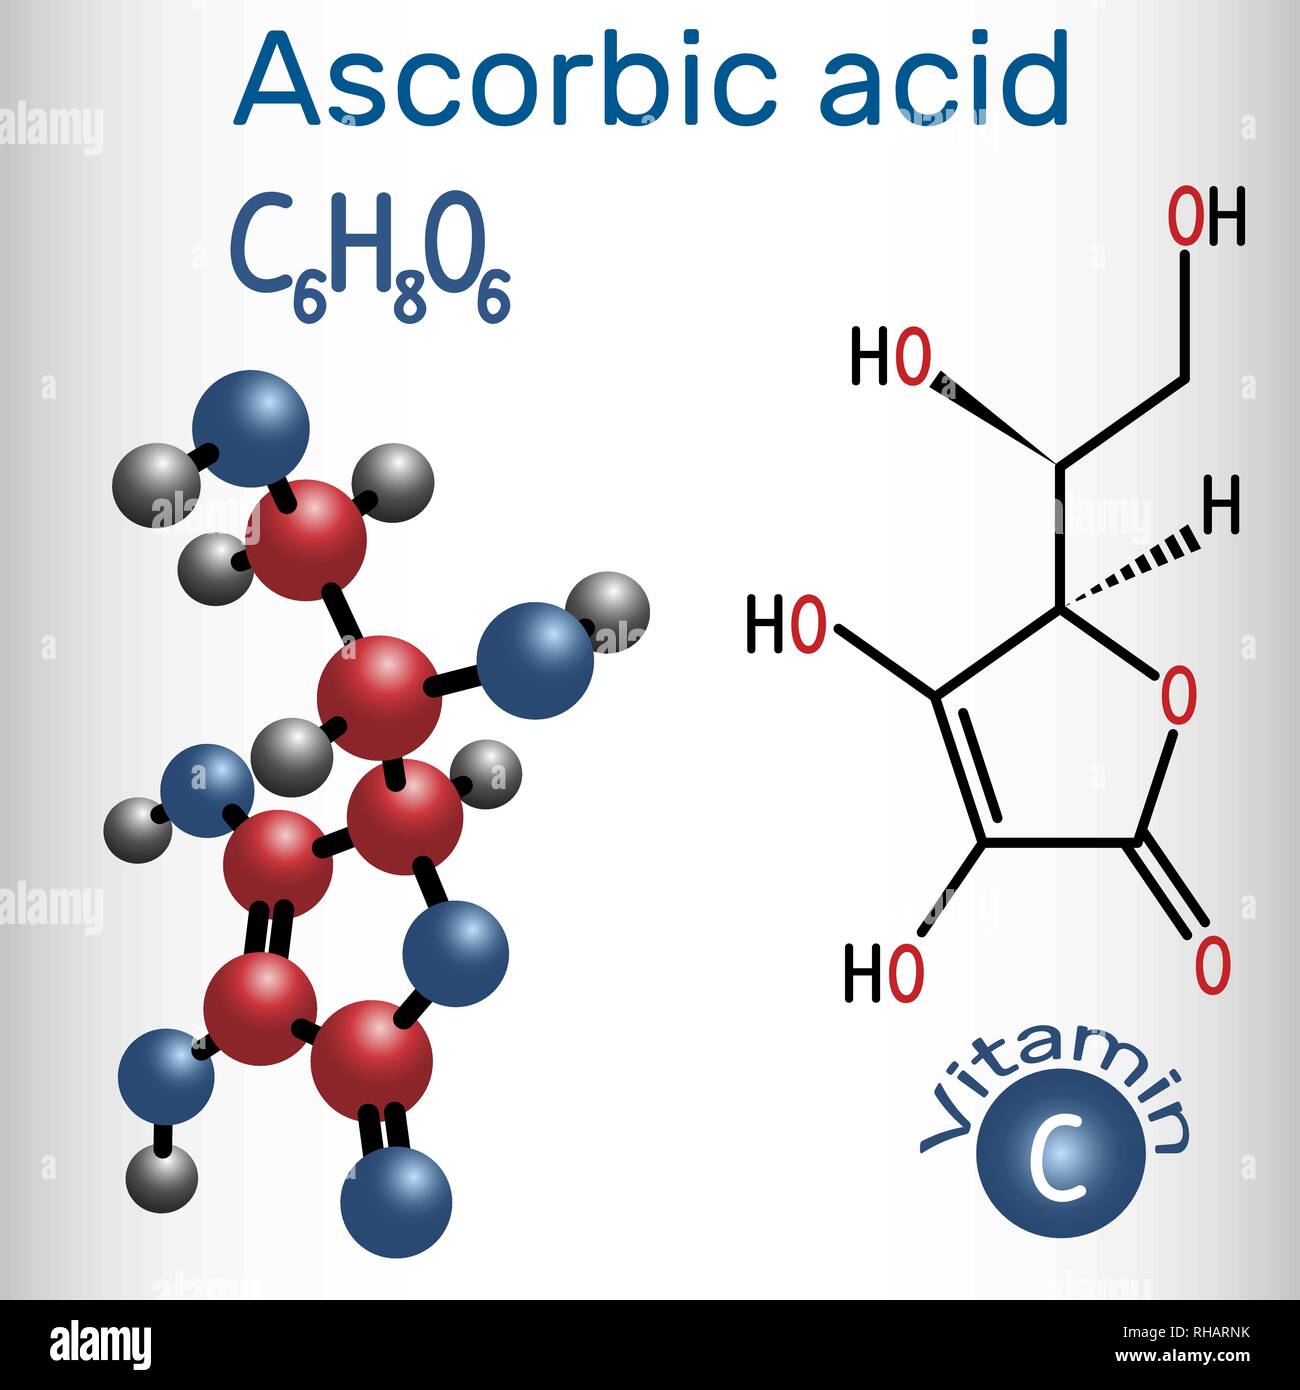 Ascorbic acid (vitamin C). Structural chemical formula and molecule model. Vector illustration Stock Vector